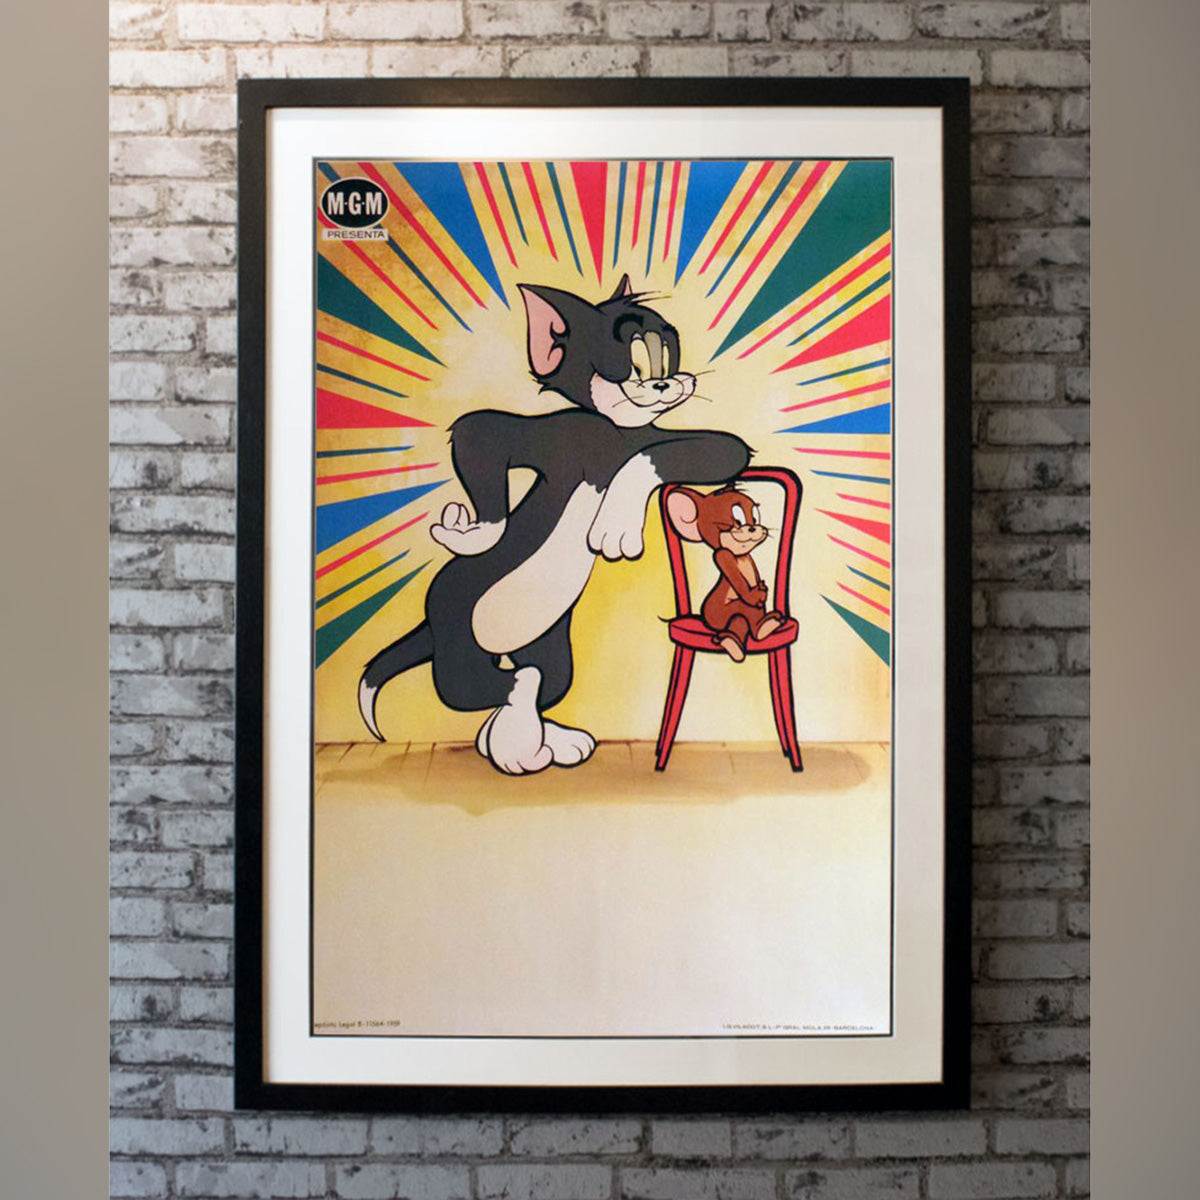 Original Movie Poster of Tom And Jerry (1959)